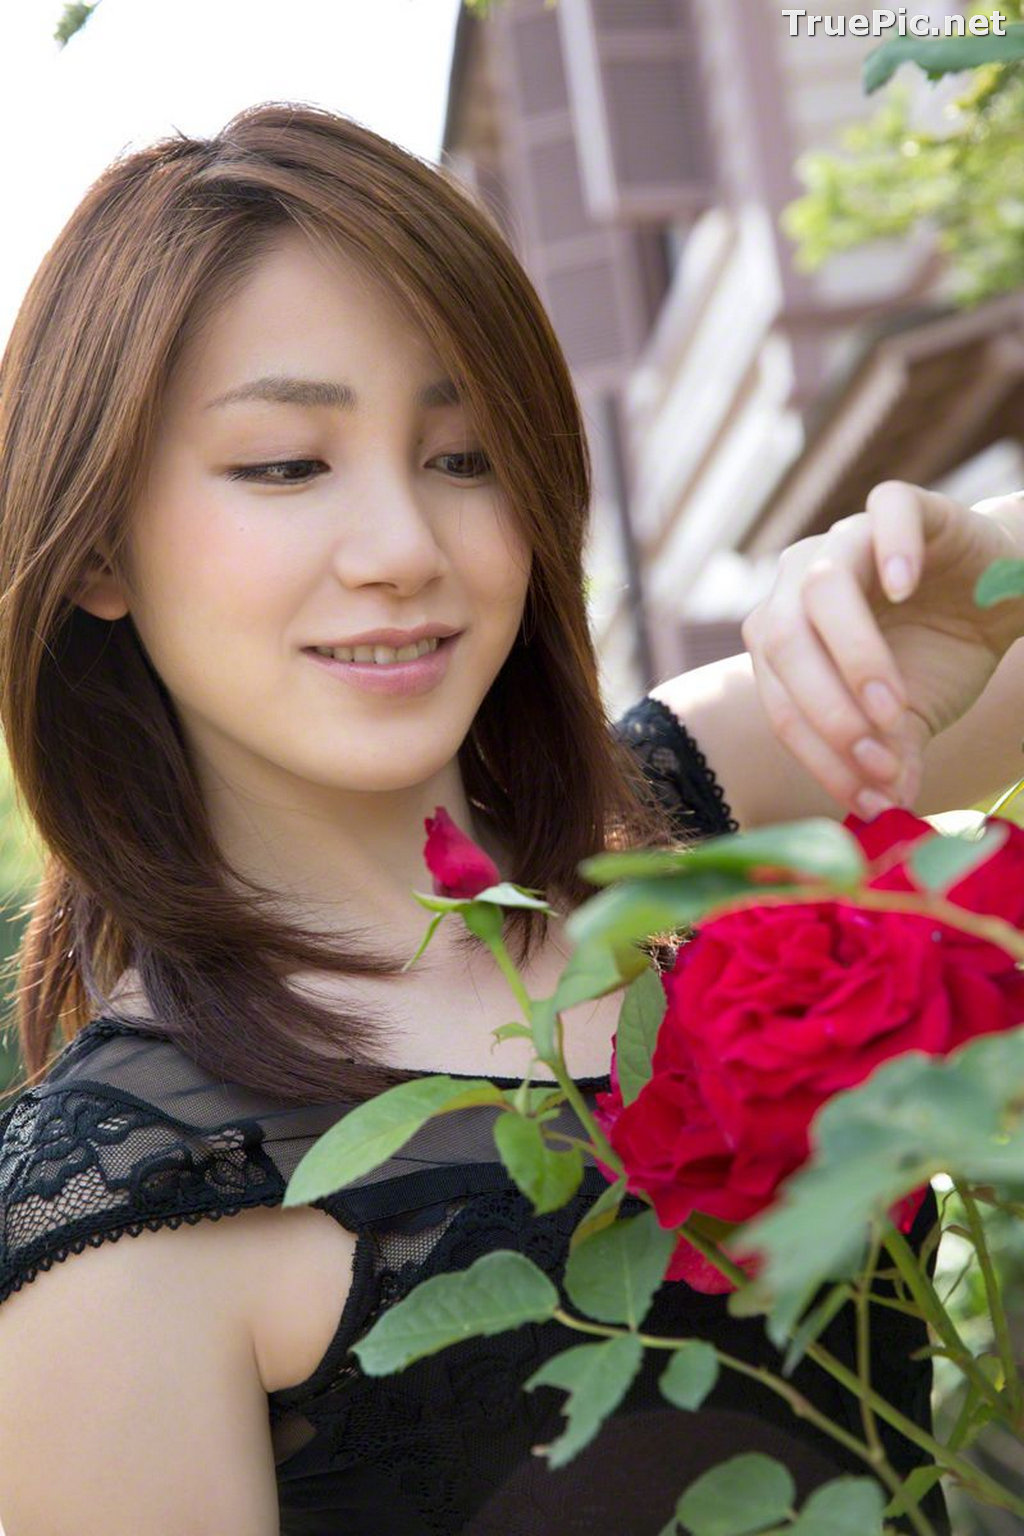 Image [Wanibooks Jacket] No.129 - Japanese Singer and Actress - You Kikkawa - TruePic.net - Picture-14